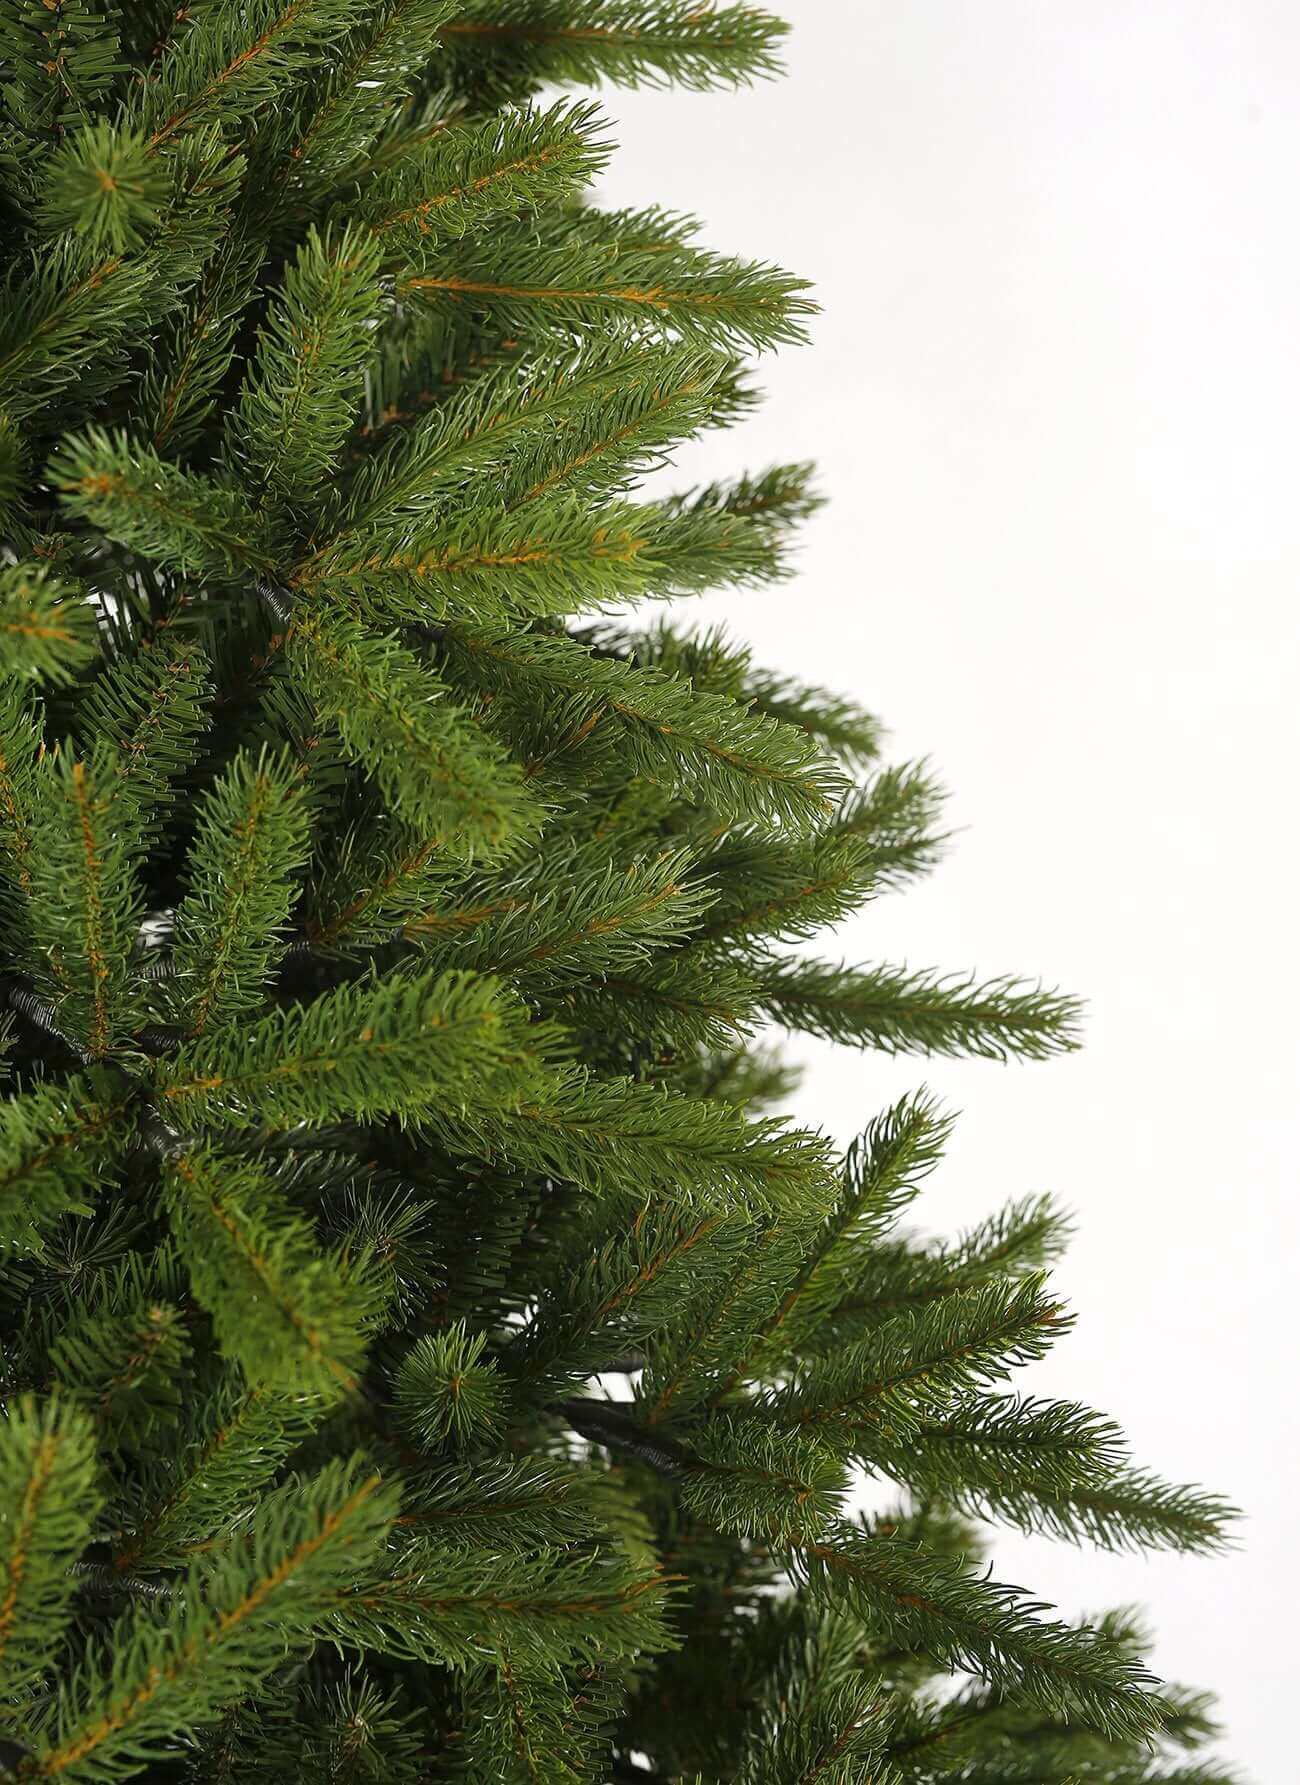 King of Christmas 7.5' King Fraser Fir Quick-Shape Artificial Christmas Tree Unlit